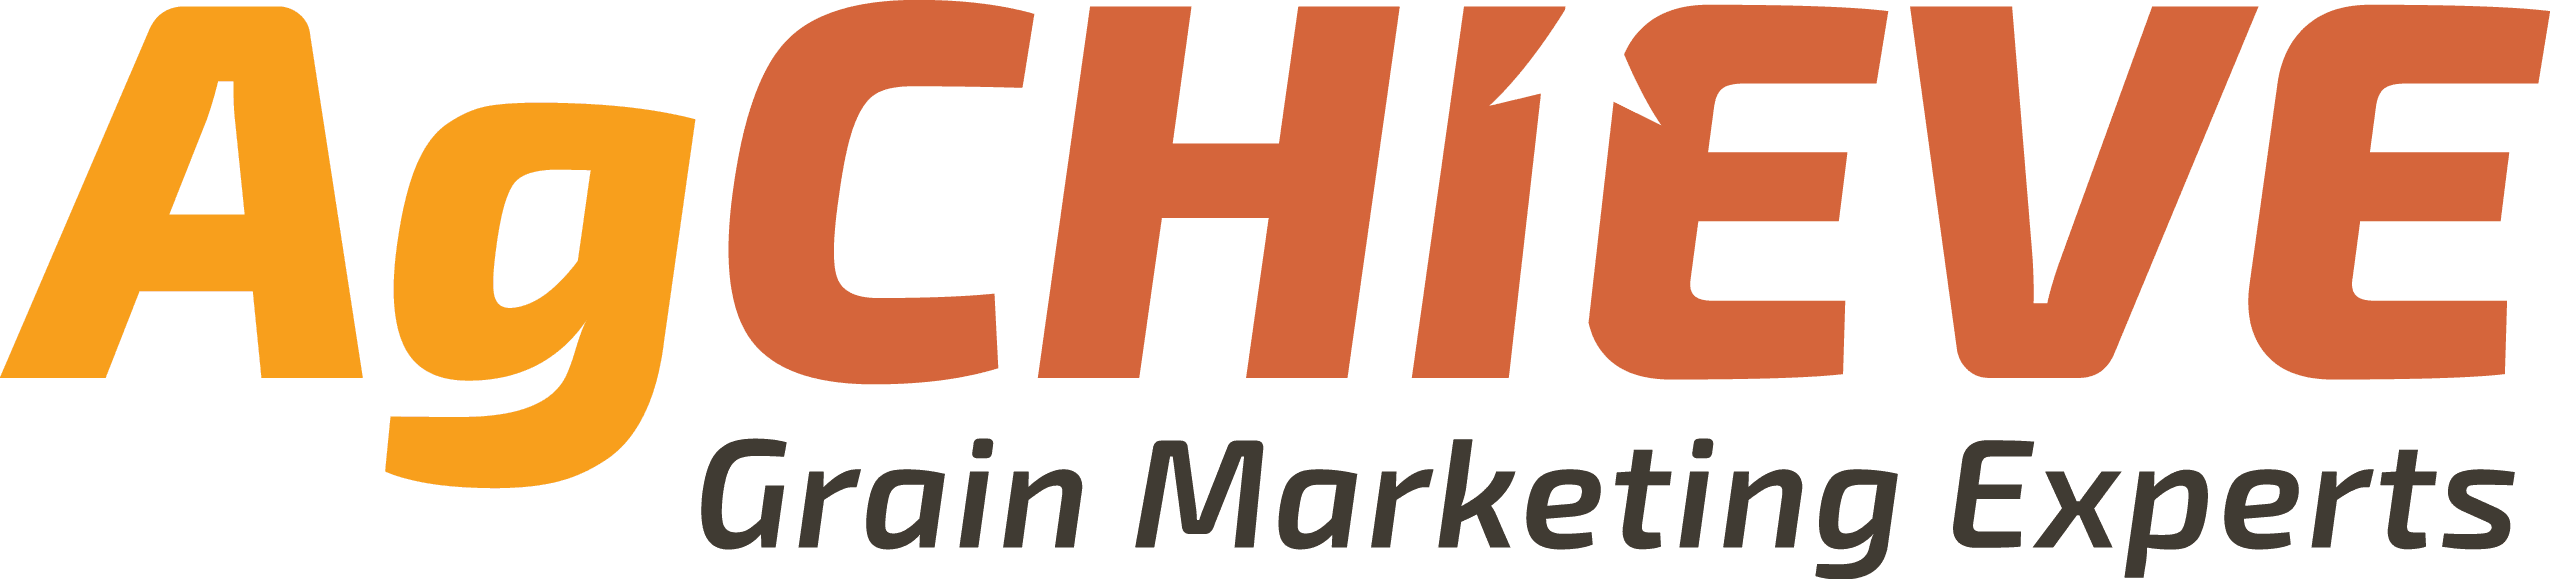 AgChieve Grain Marketing Advisory